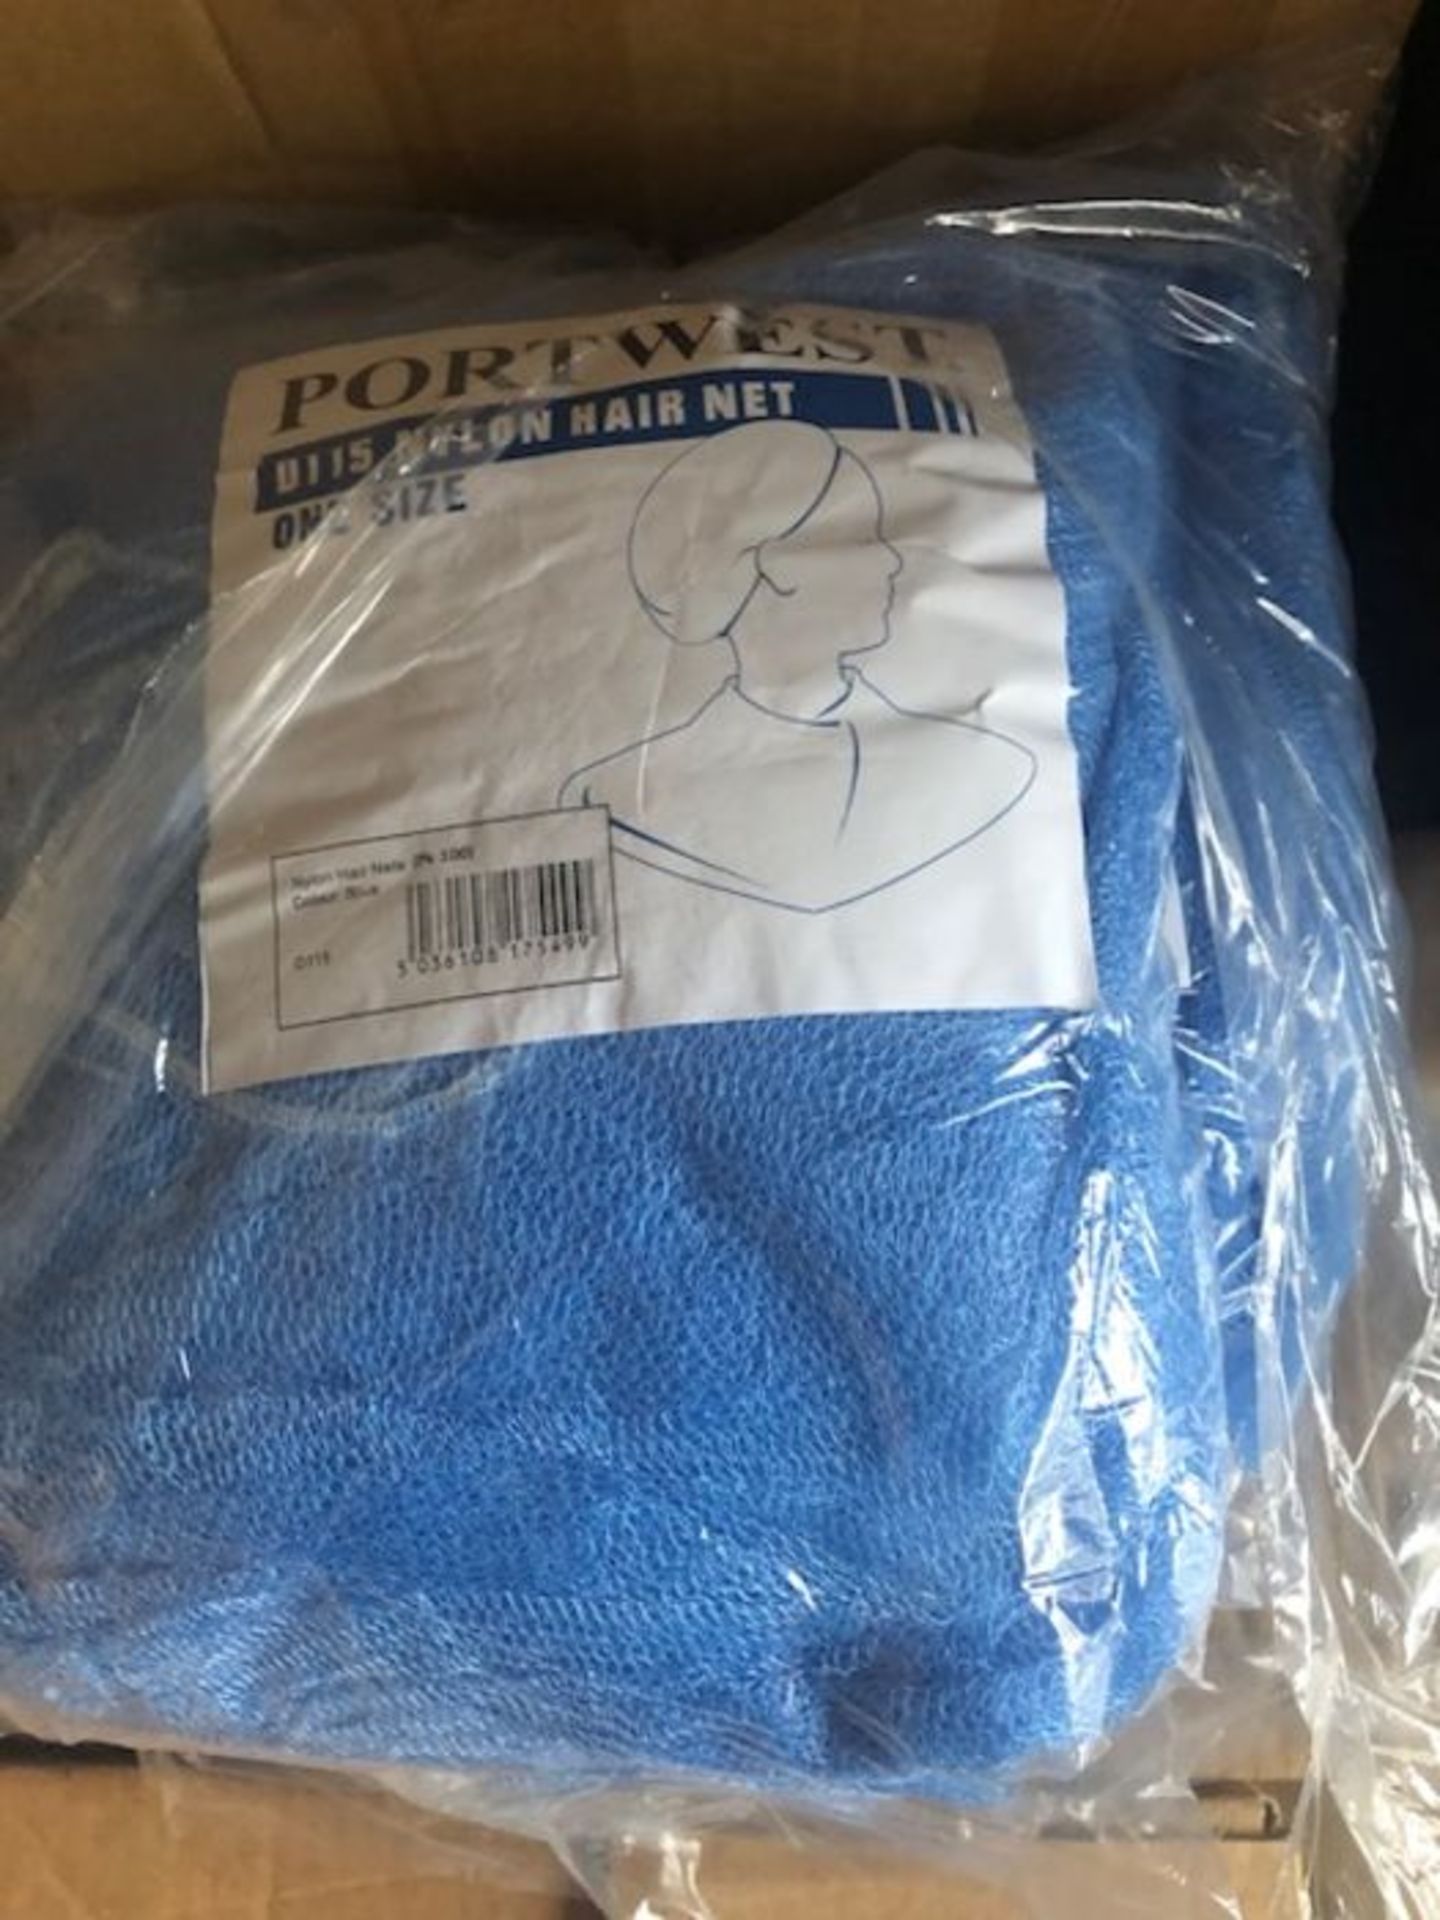 Bag of 1000 x Portwest D115 Nylon Disposable Hairnet - H9R 2000150939 - Image 2 of 3